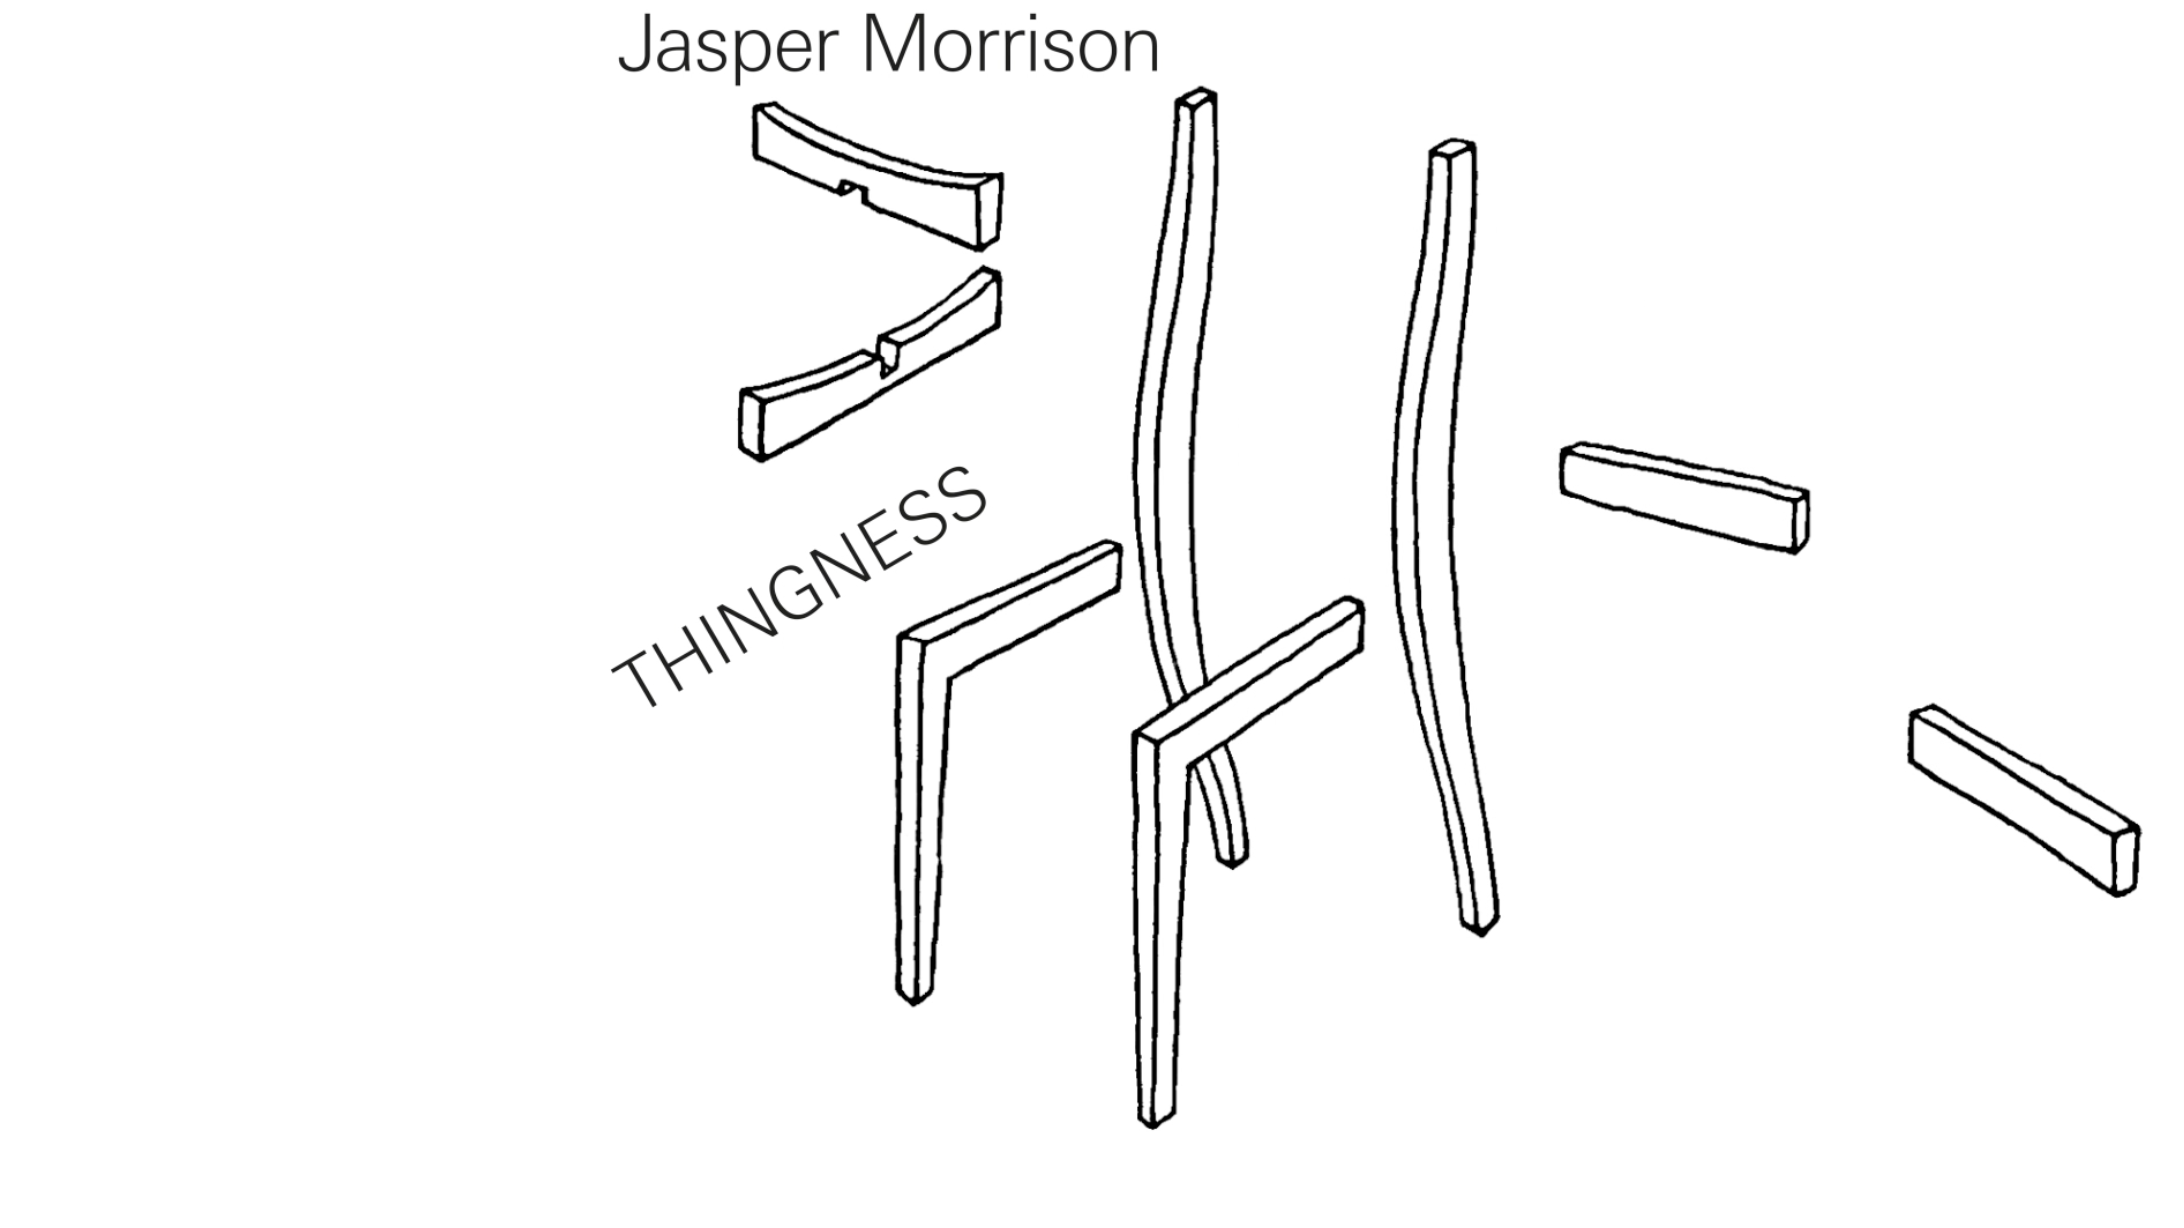 Still of animated Jasper Morrison Thingness visual